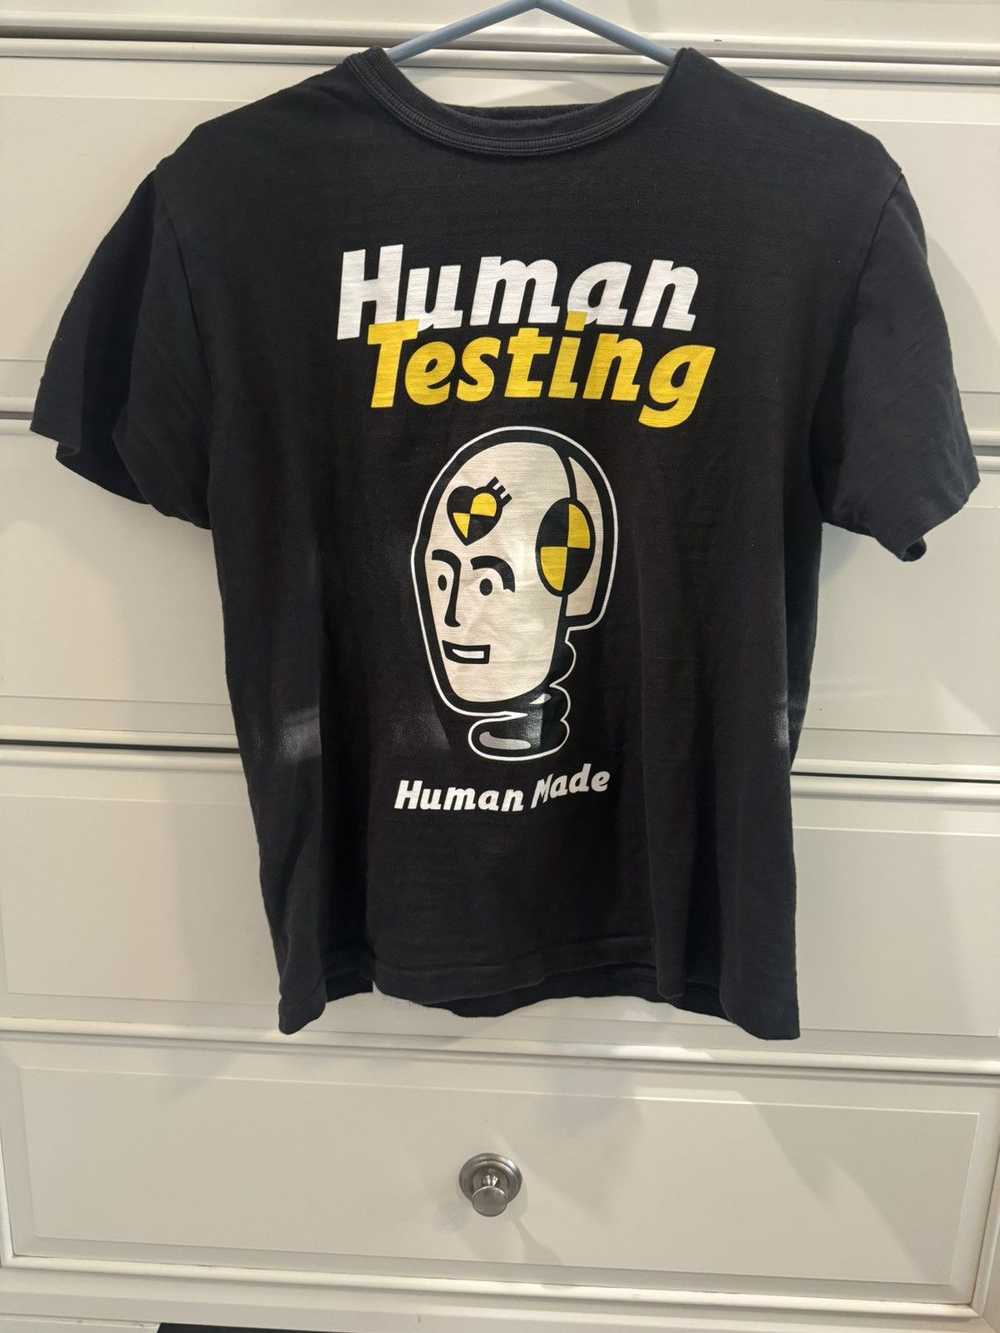 Human Made Human made testing T shirt - image 1